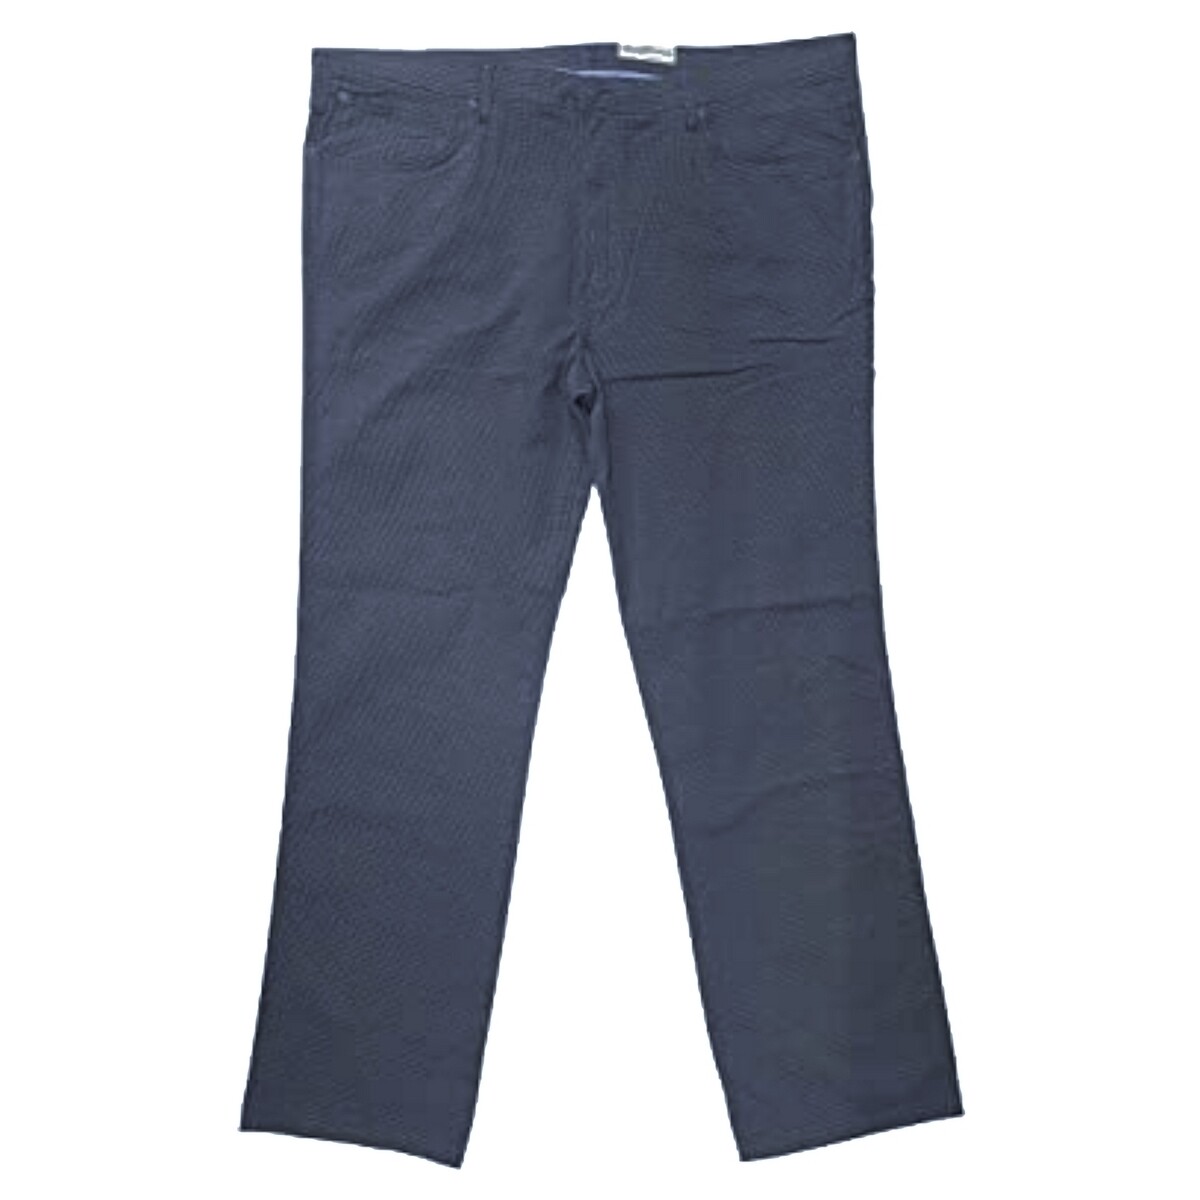 Vêtements Homme Pantalons Wrangler W120-Z5 Bleu